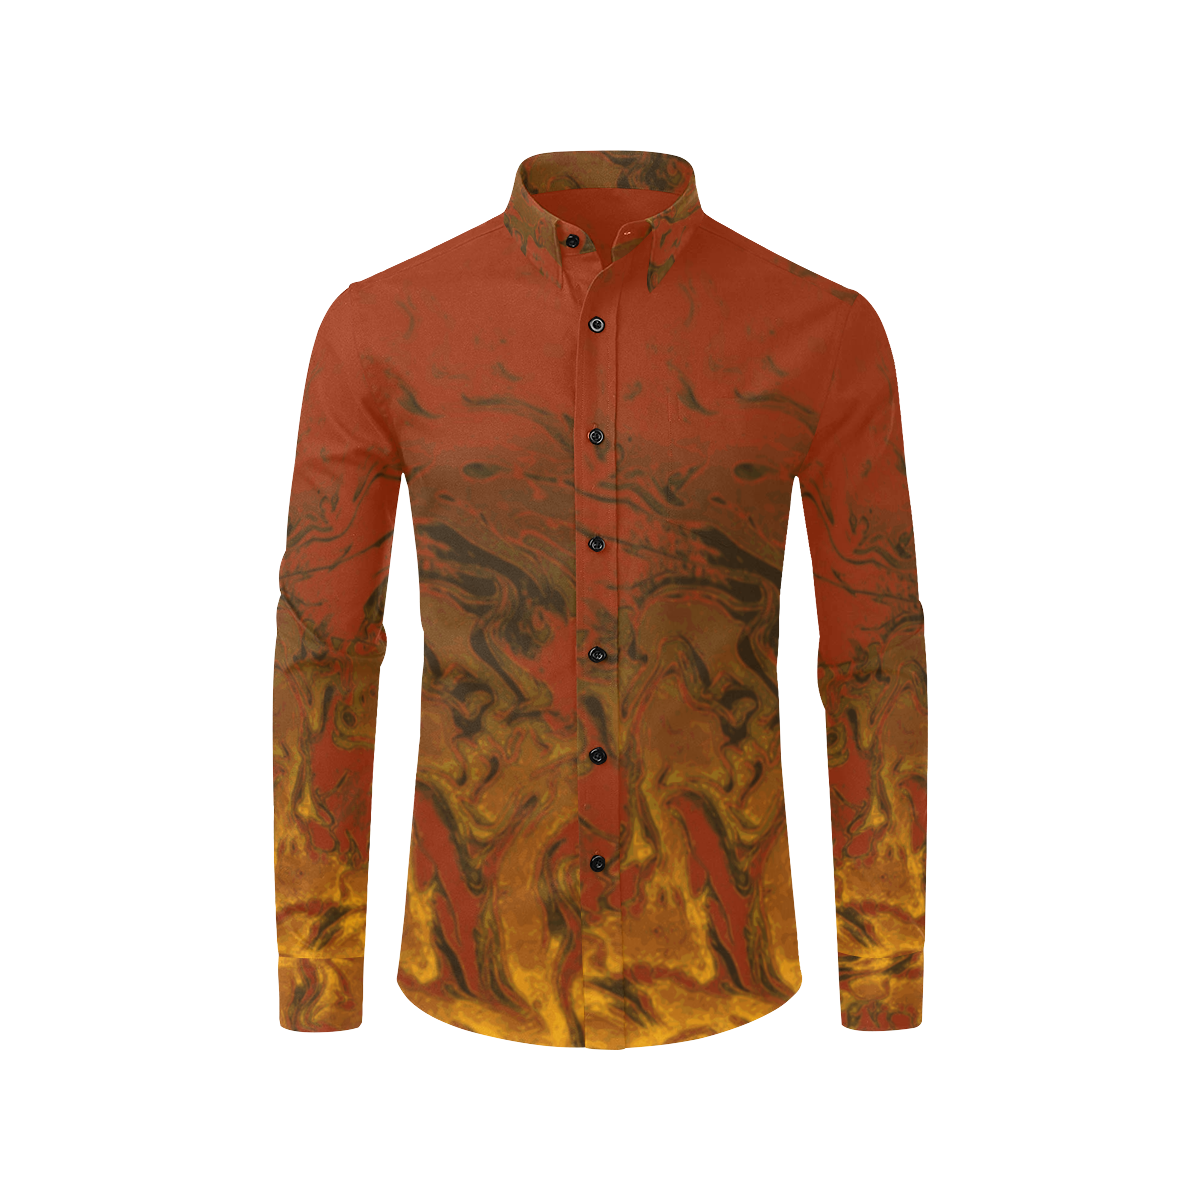 Eternal Fire - gold orange black red gradient swirl pattern Men's All Over Print Casual Dress Shirt (Model T61)